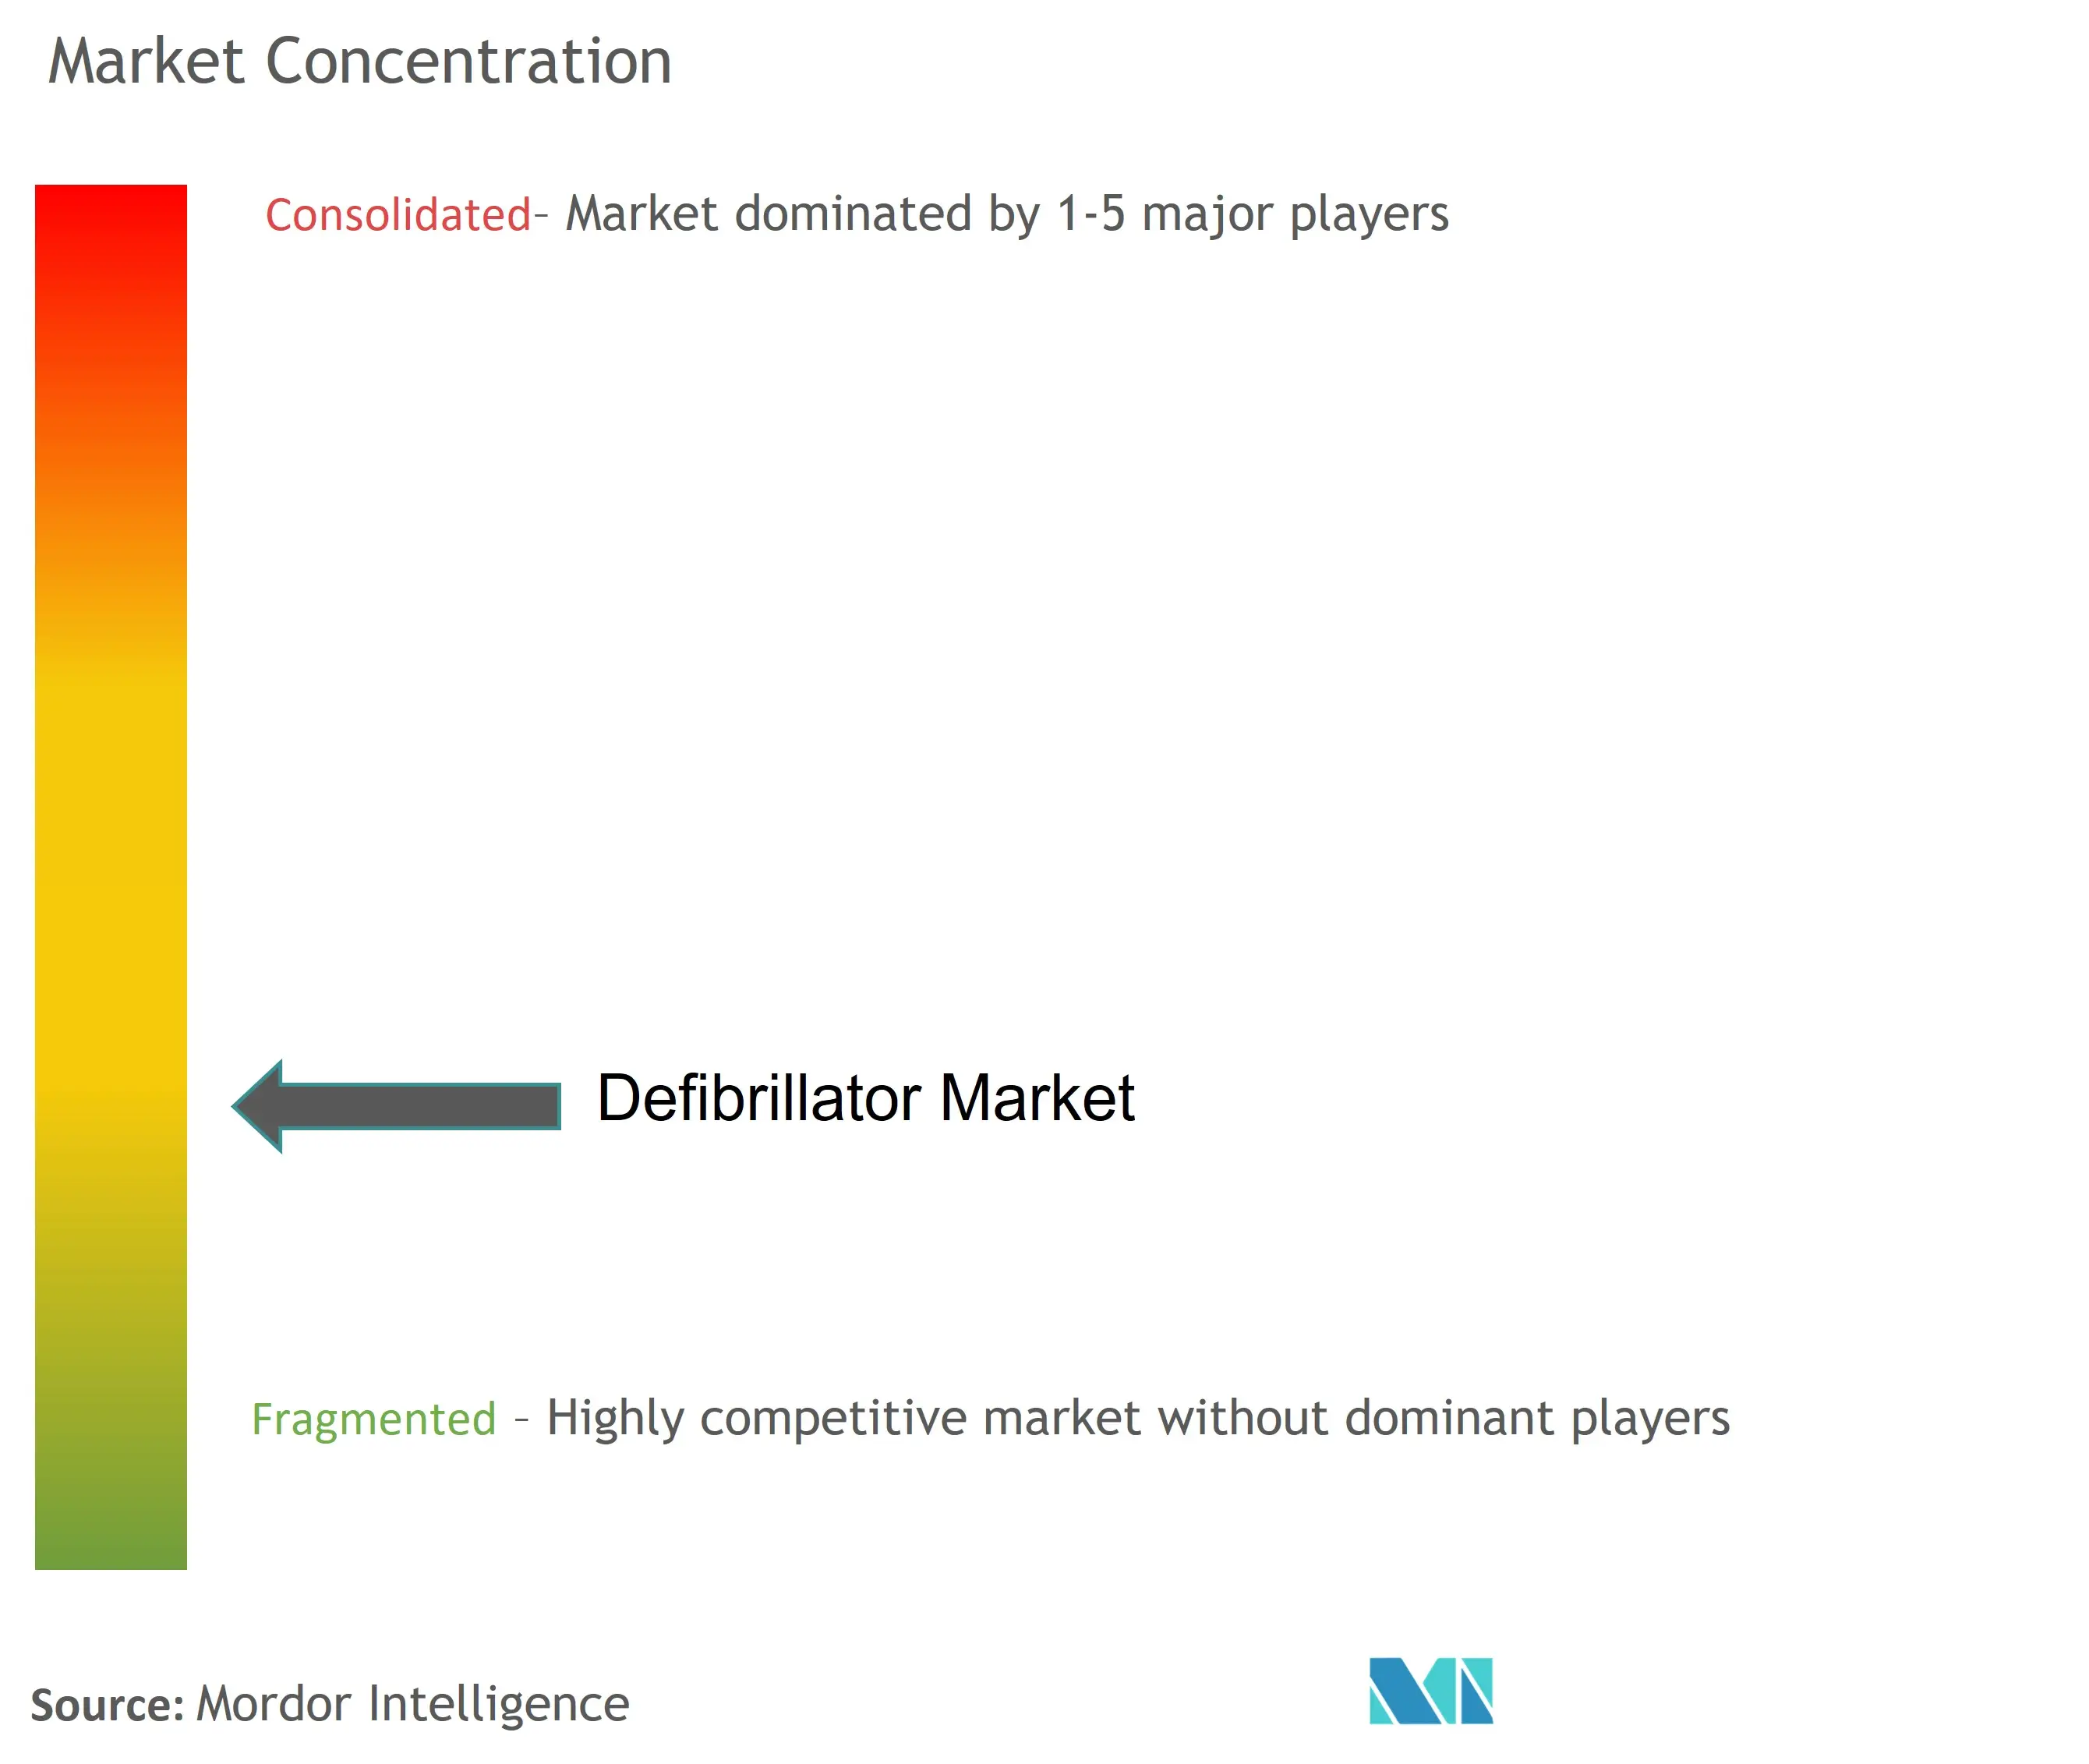 Defibrillator Market Concentration